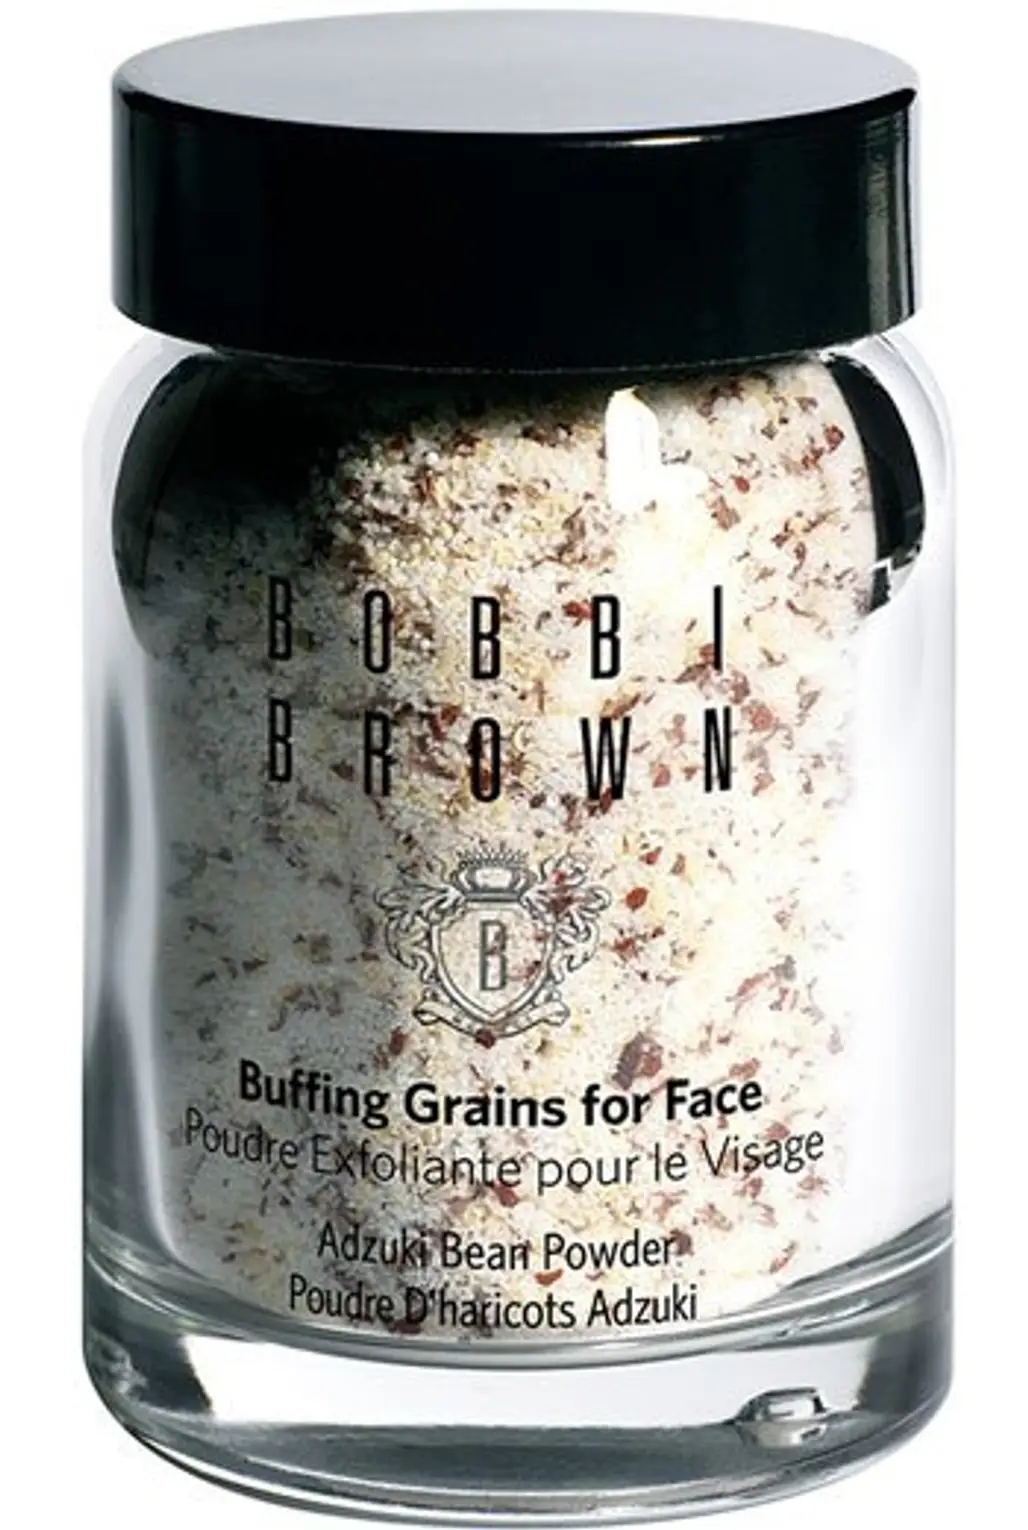 Bobbi Brown Buffing Grains